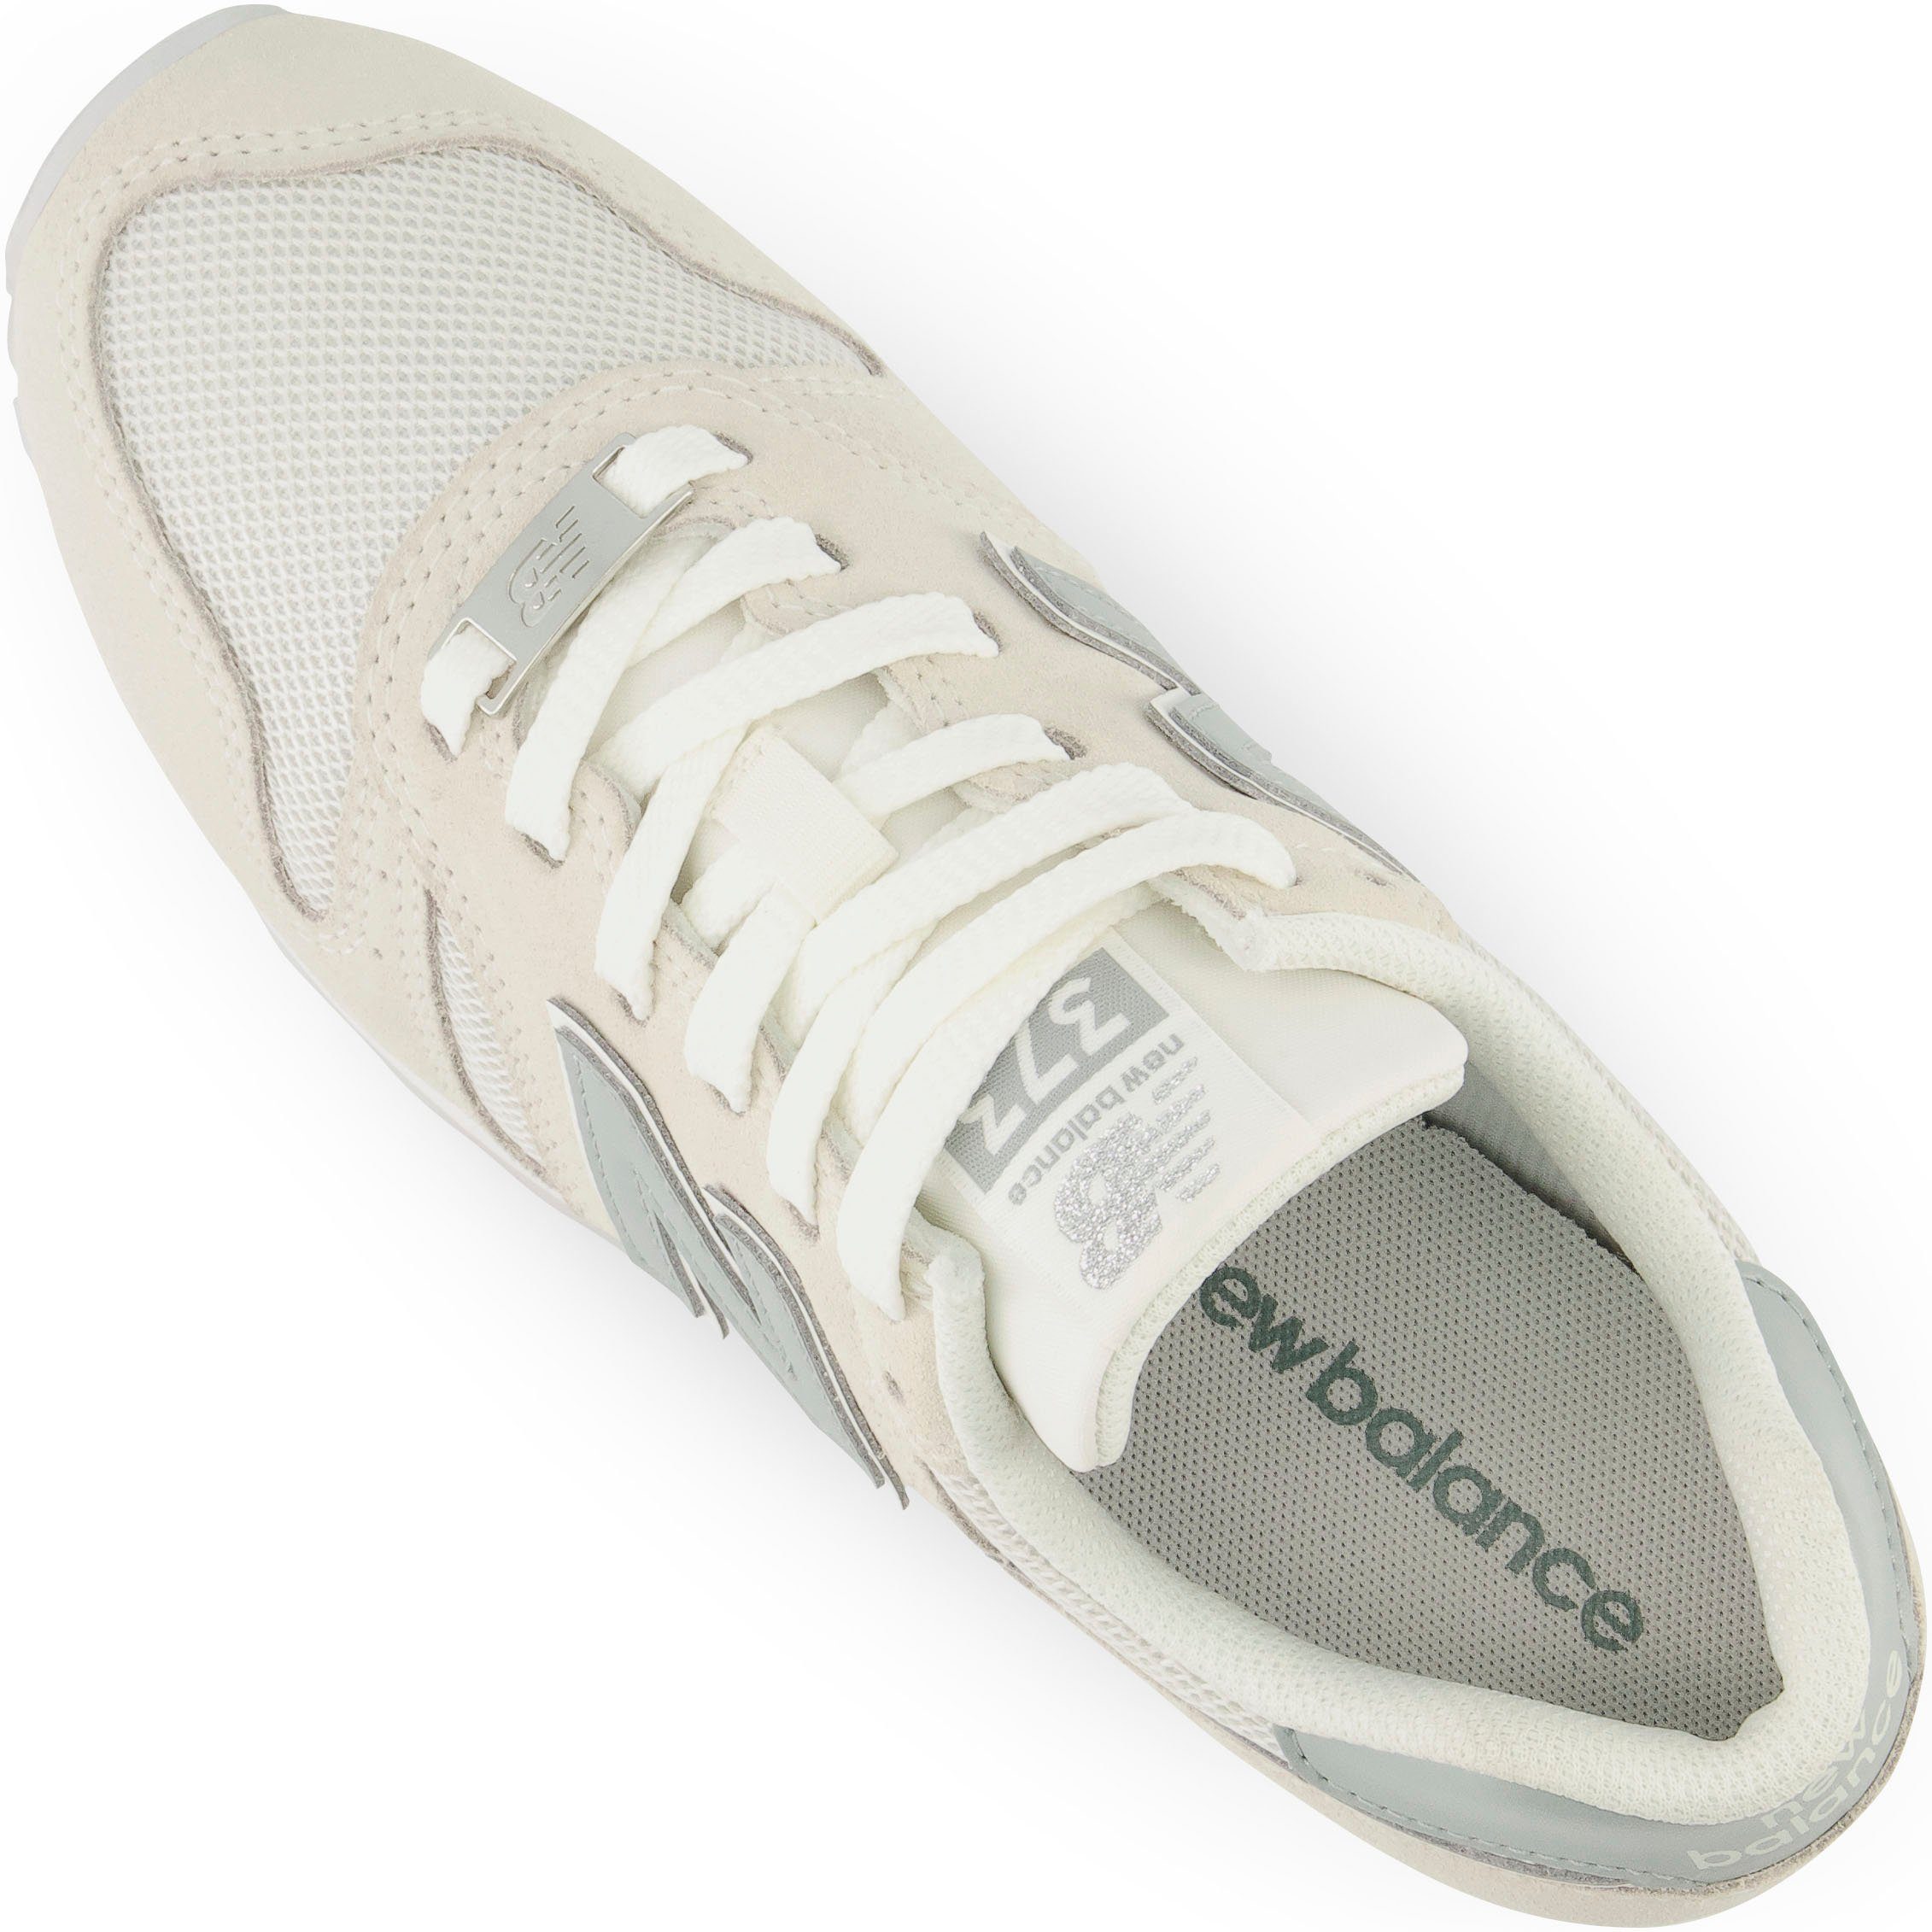 WL373 New Balance hellapricot Sneaker